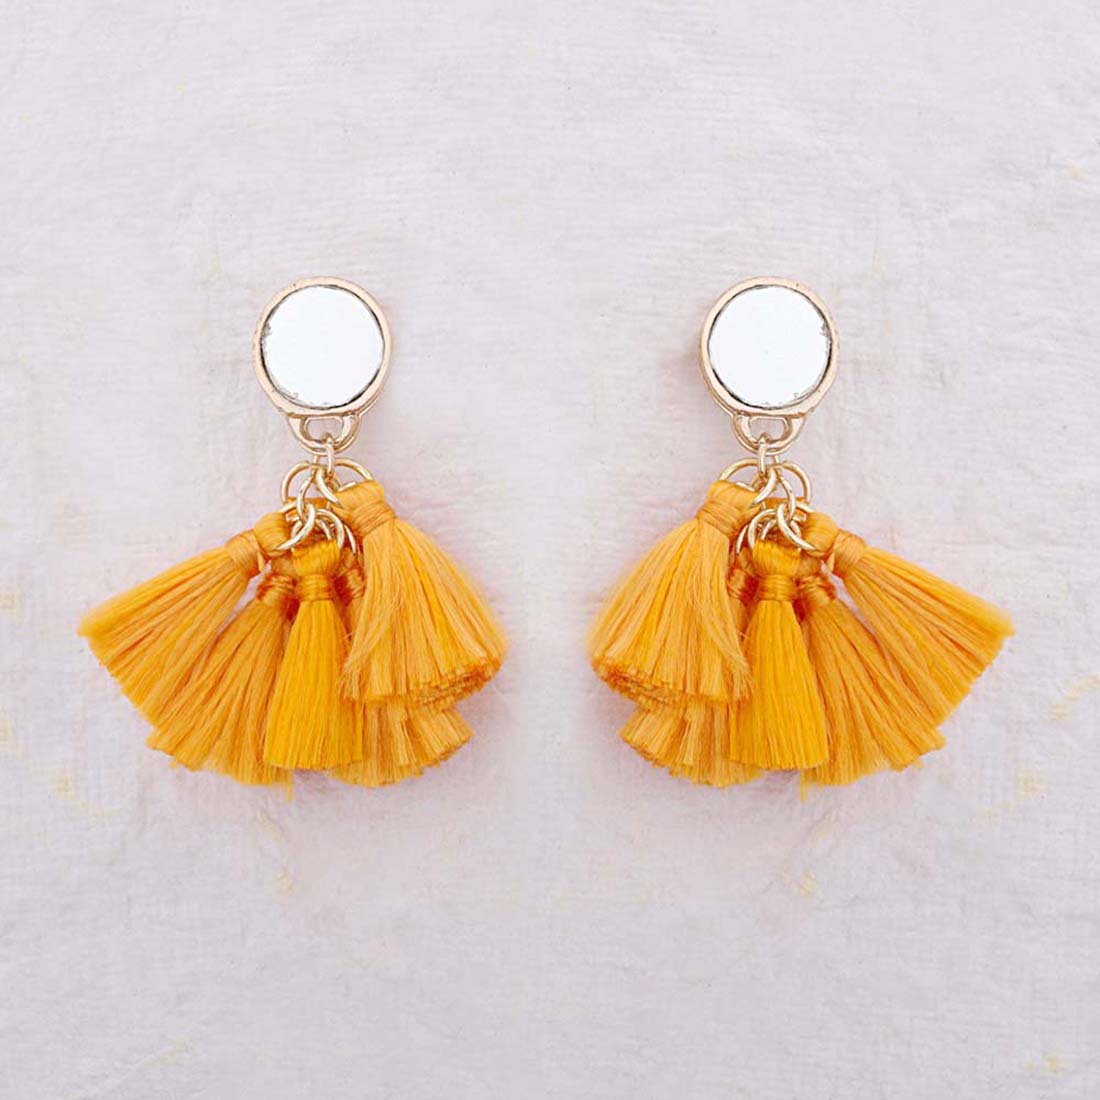 Gorgeous Earrings with Orange Tassels